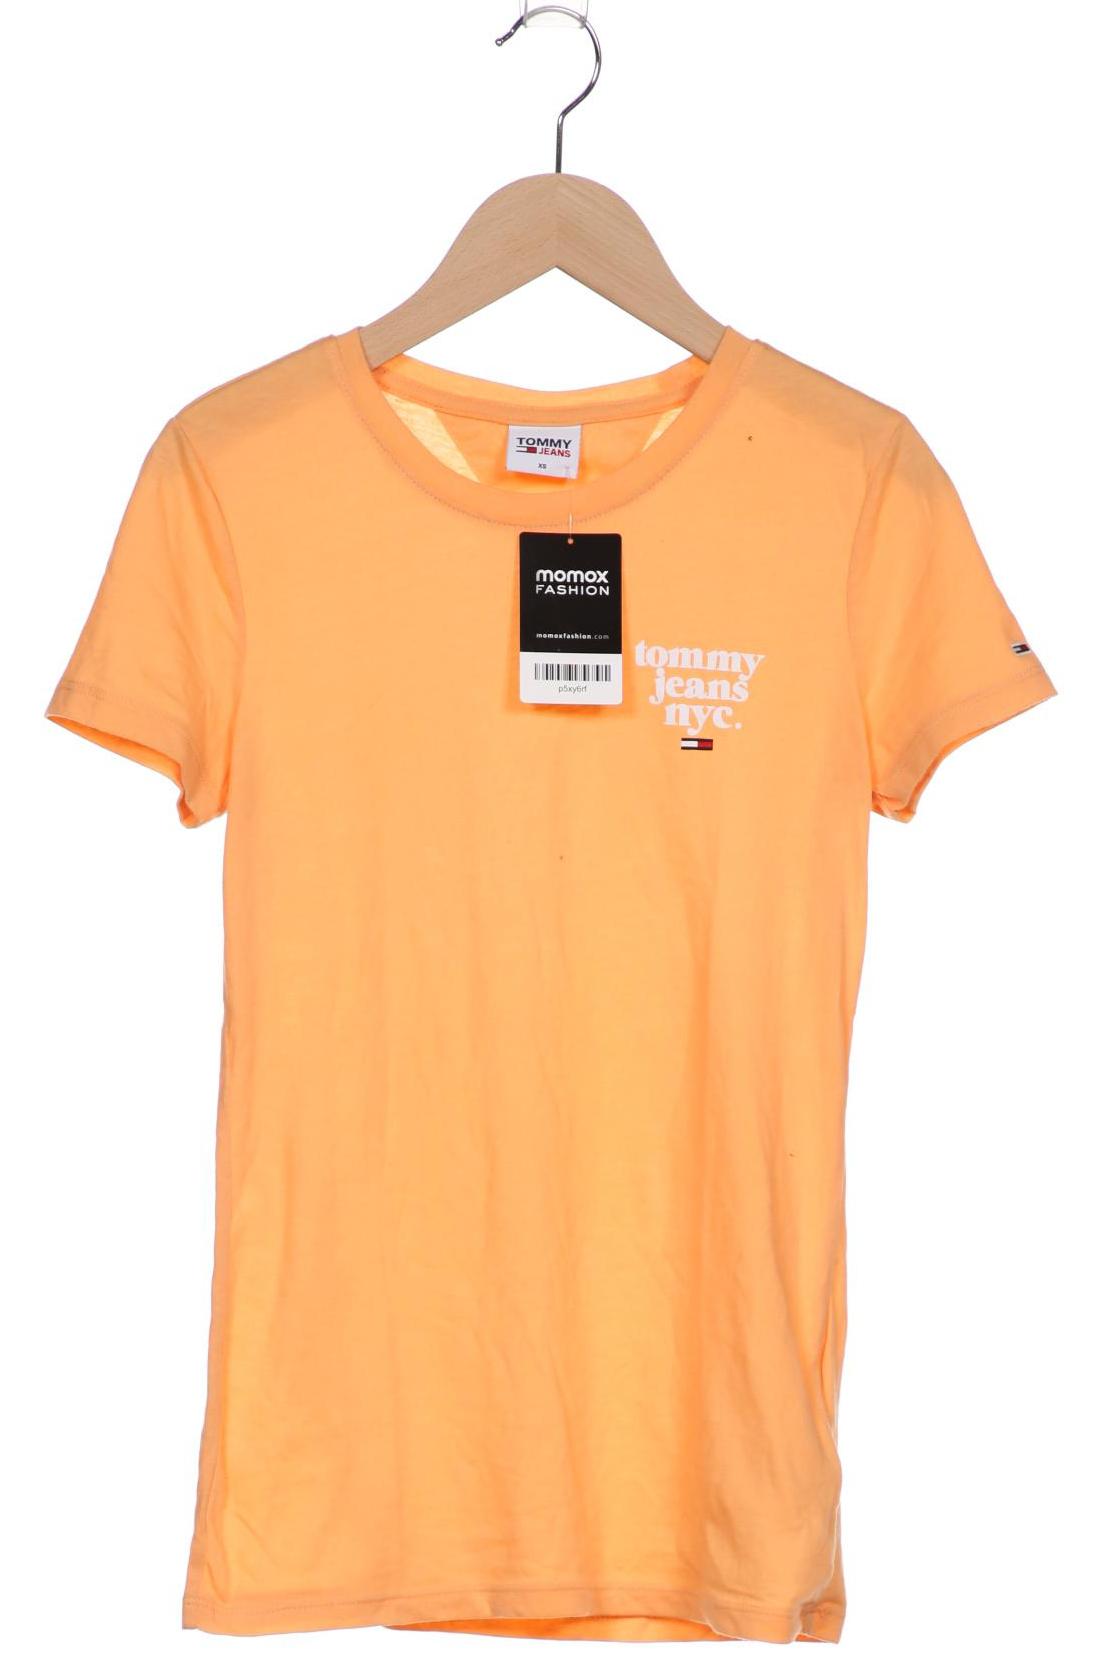 Tommy Jeans Damen T-Shirt, orange von Tommy Jeans